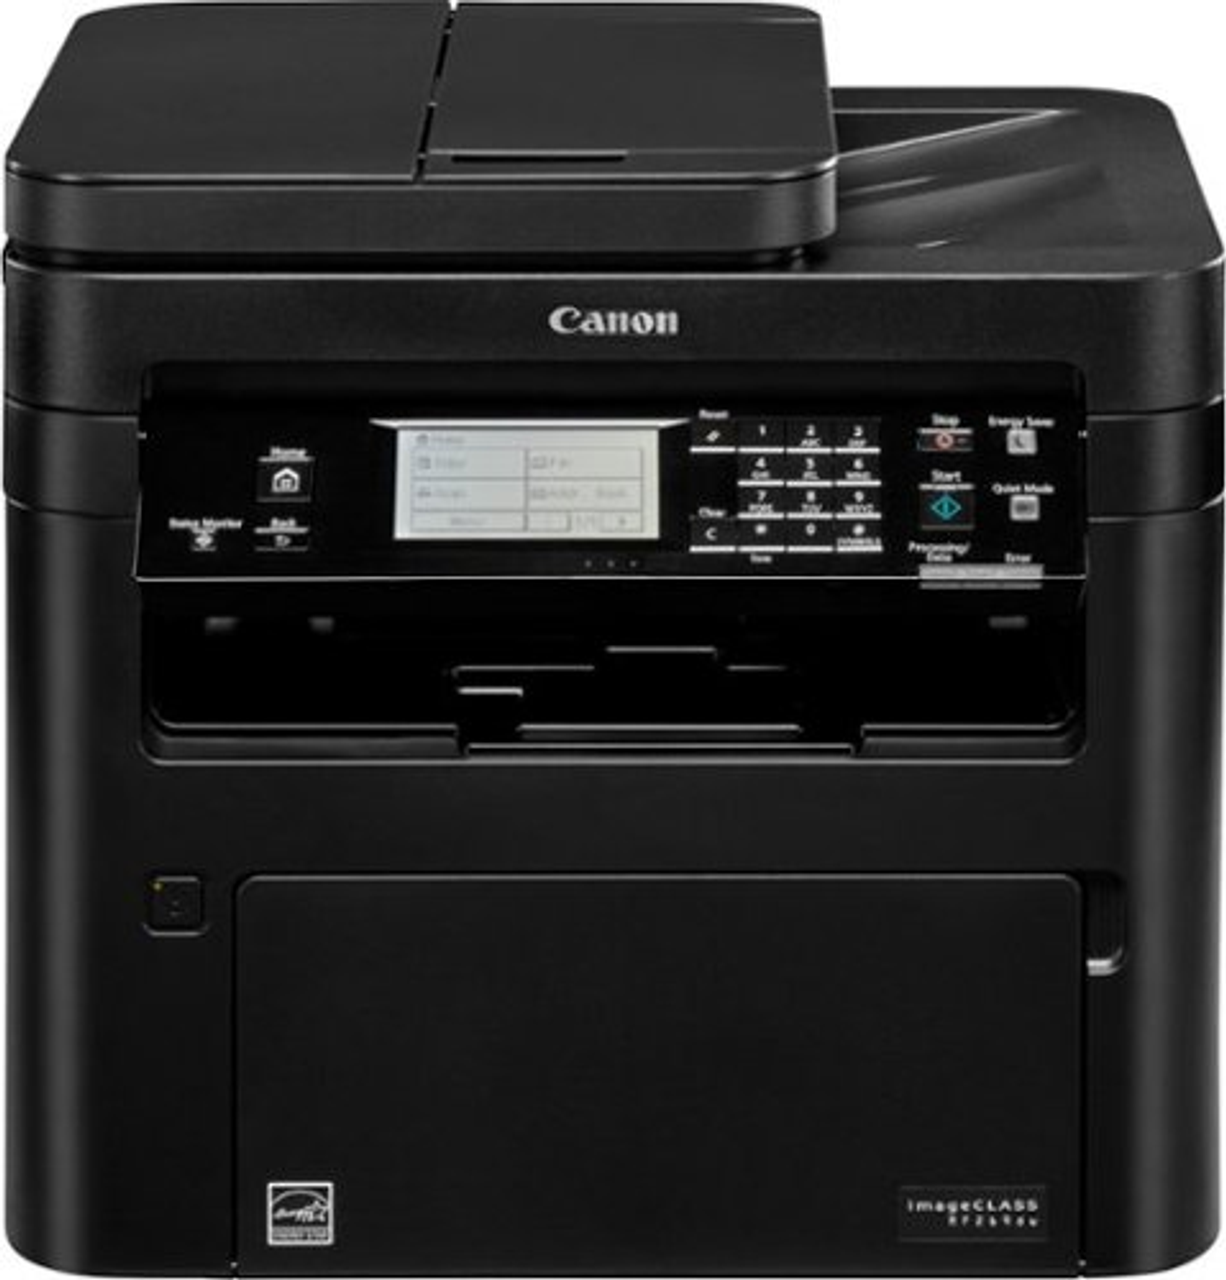 Canon imageCLASS MF269dw II Wireless Black-and-White All-In-One Laser Printer - Black